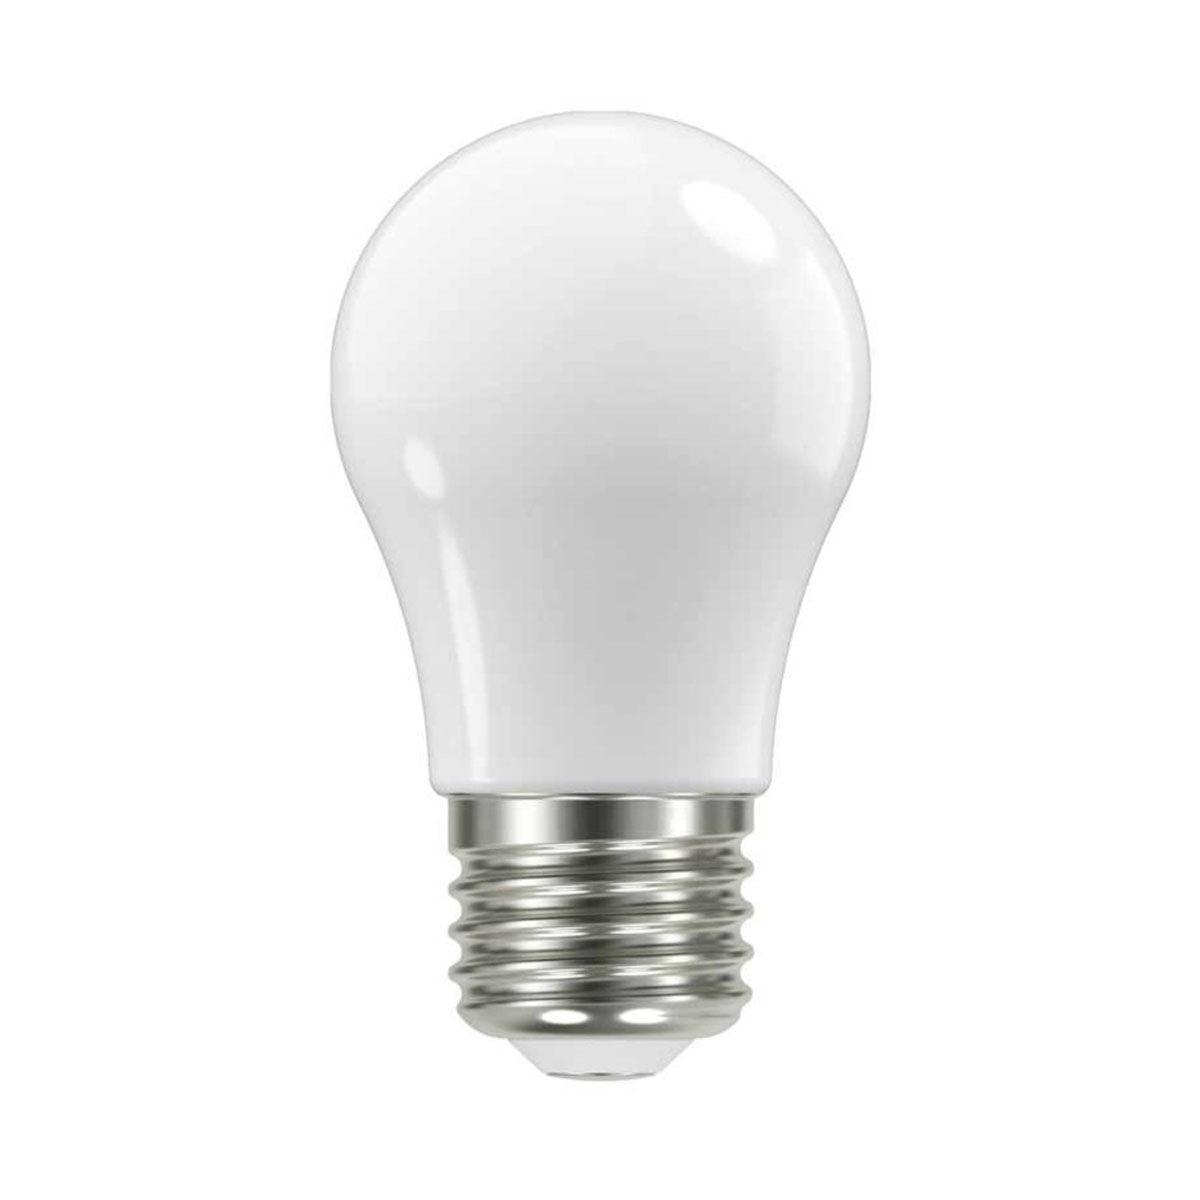 A15 Standard LED Bulb, 8 Watt, 800 Lumens, 3000K, E26 Medium Base, Frosted Finish